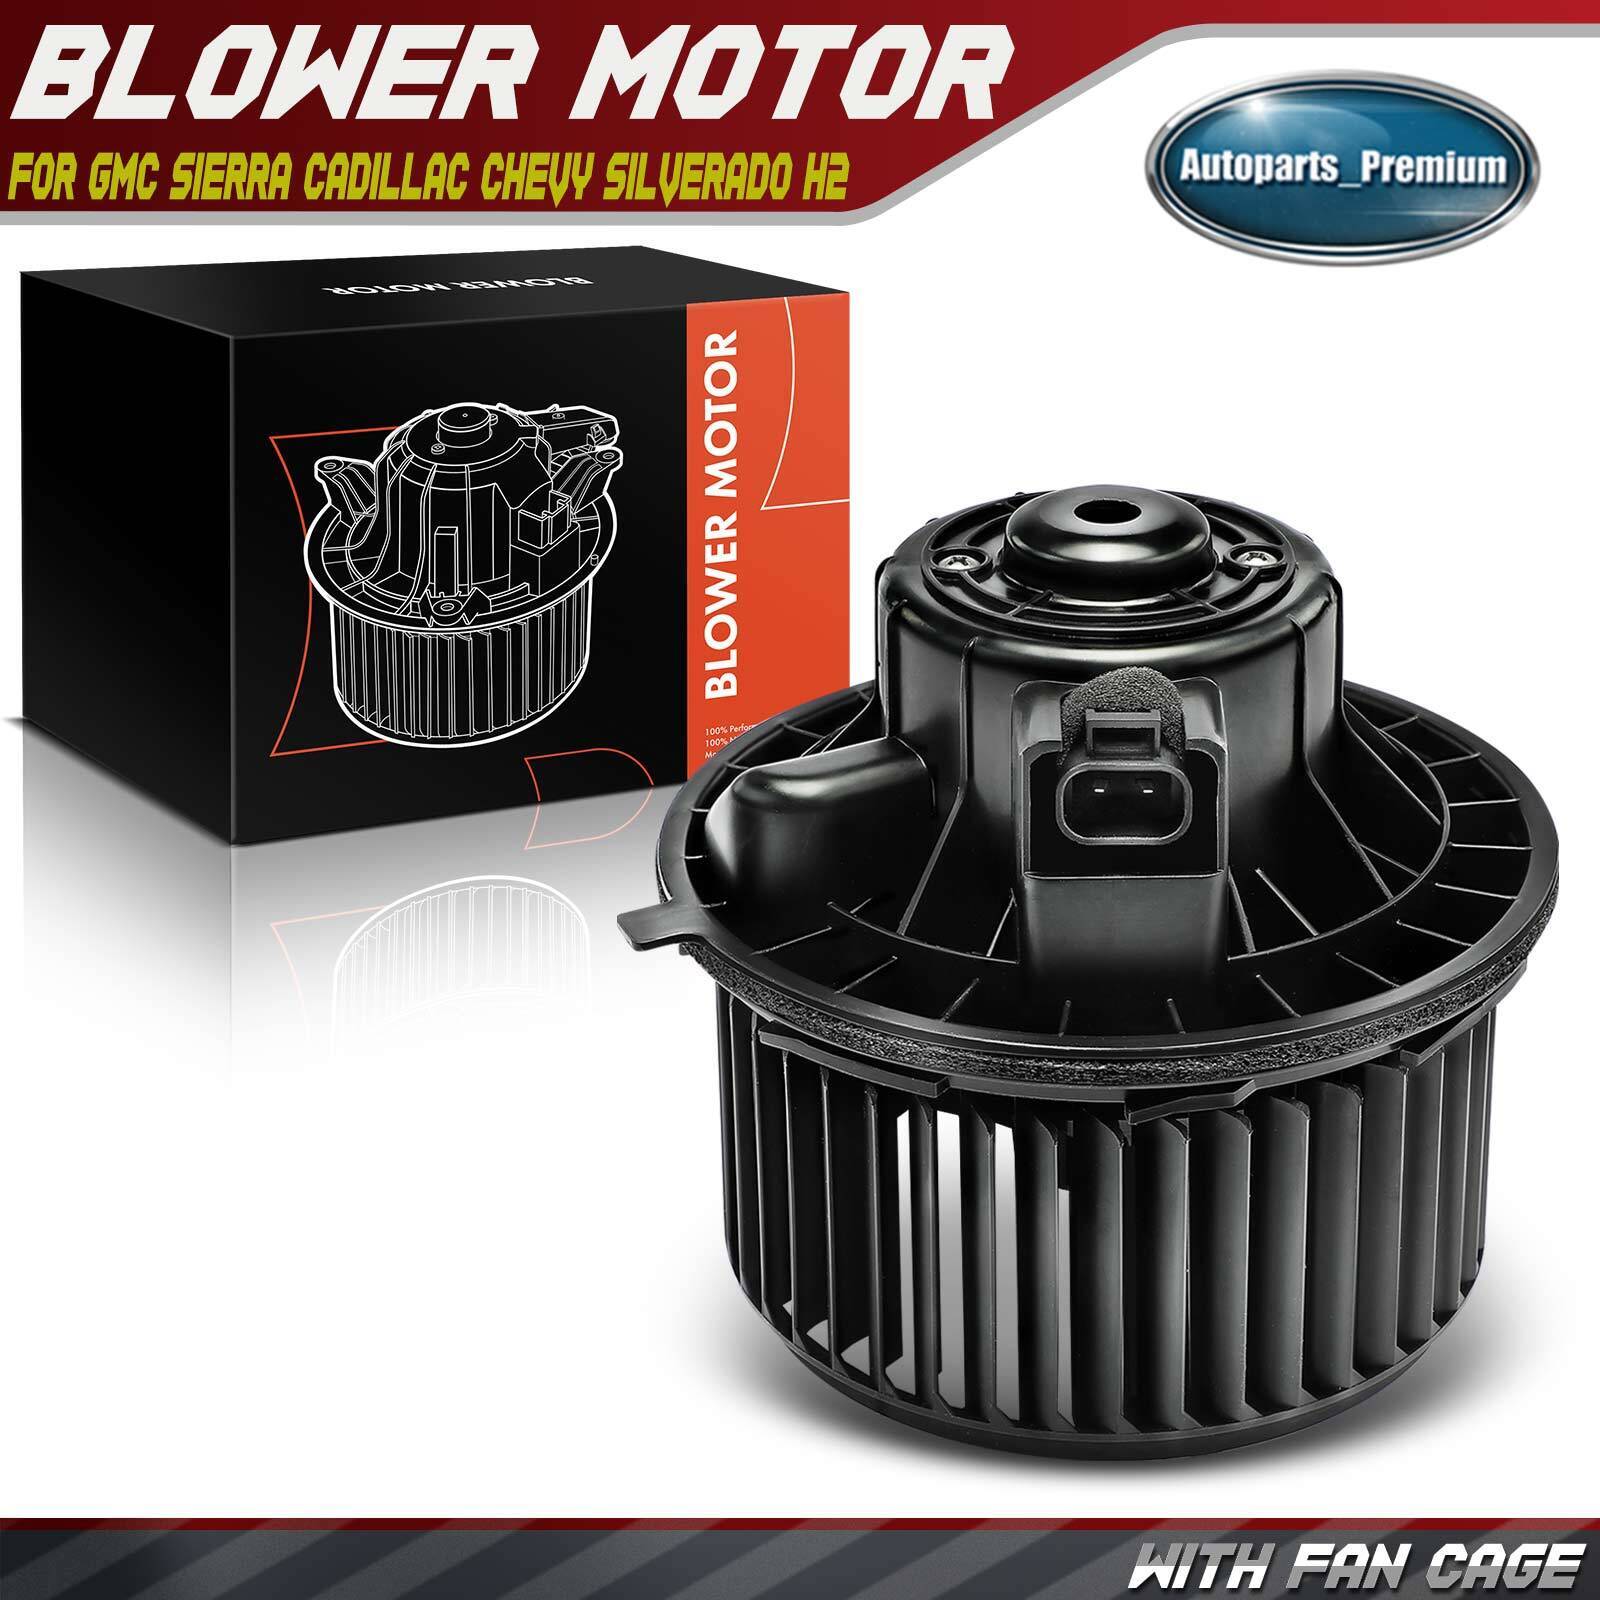 HVAC A/C Heater Blower Motor w/ Fan Cage for Chevy Silverado GMC Sierra 03-06